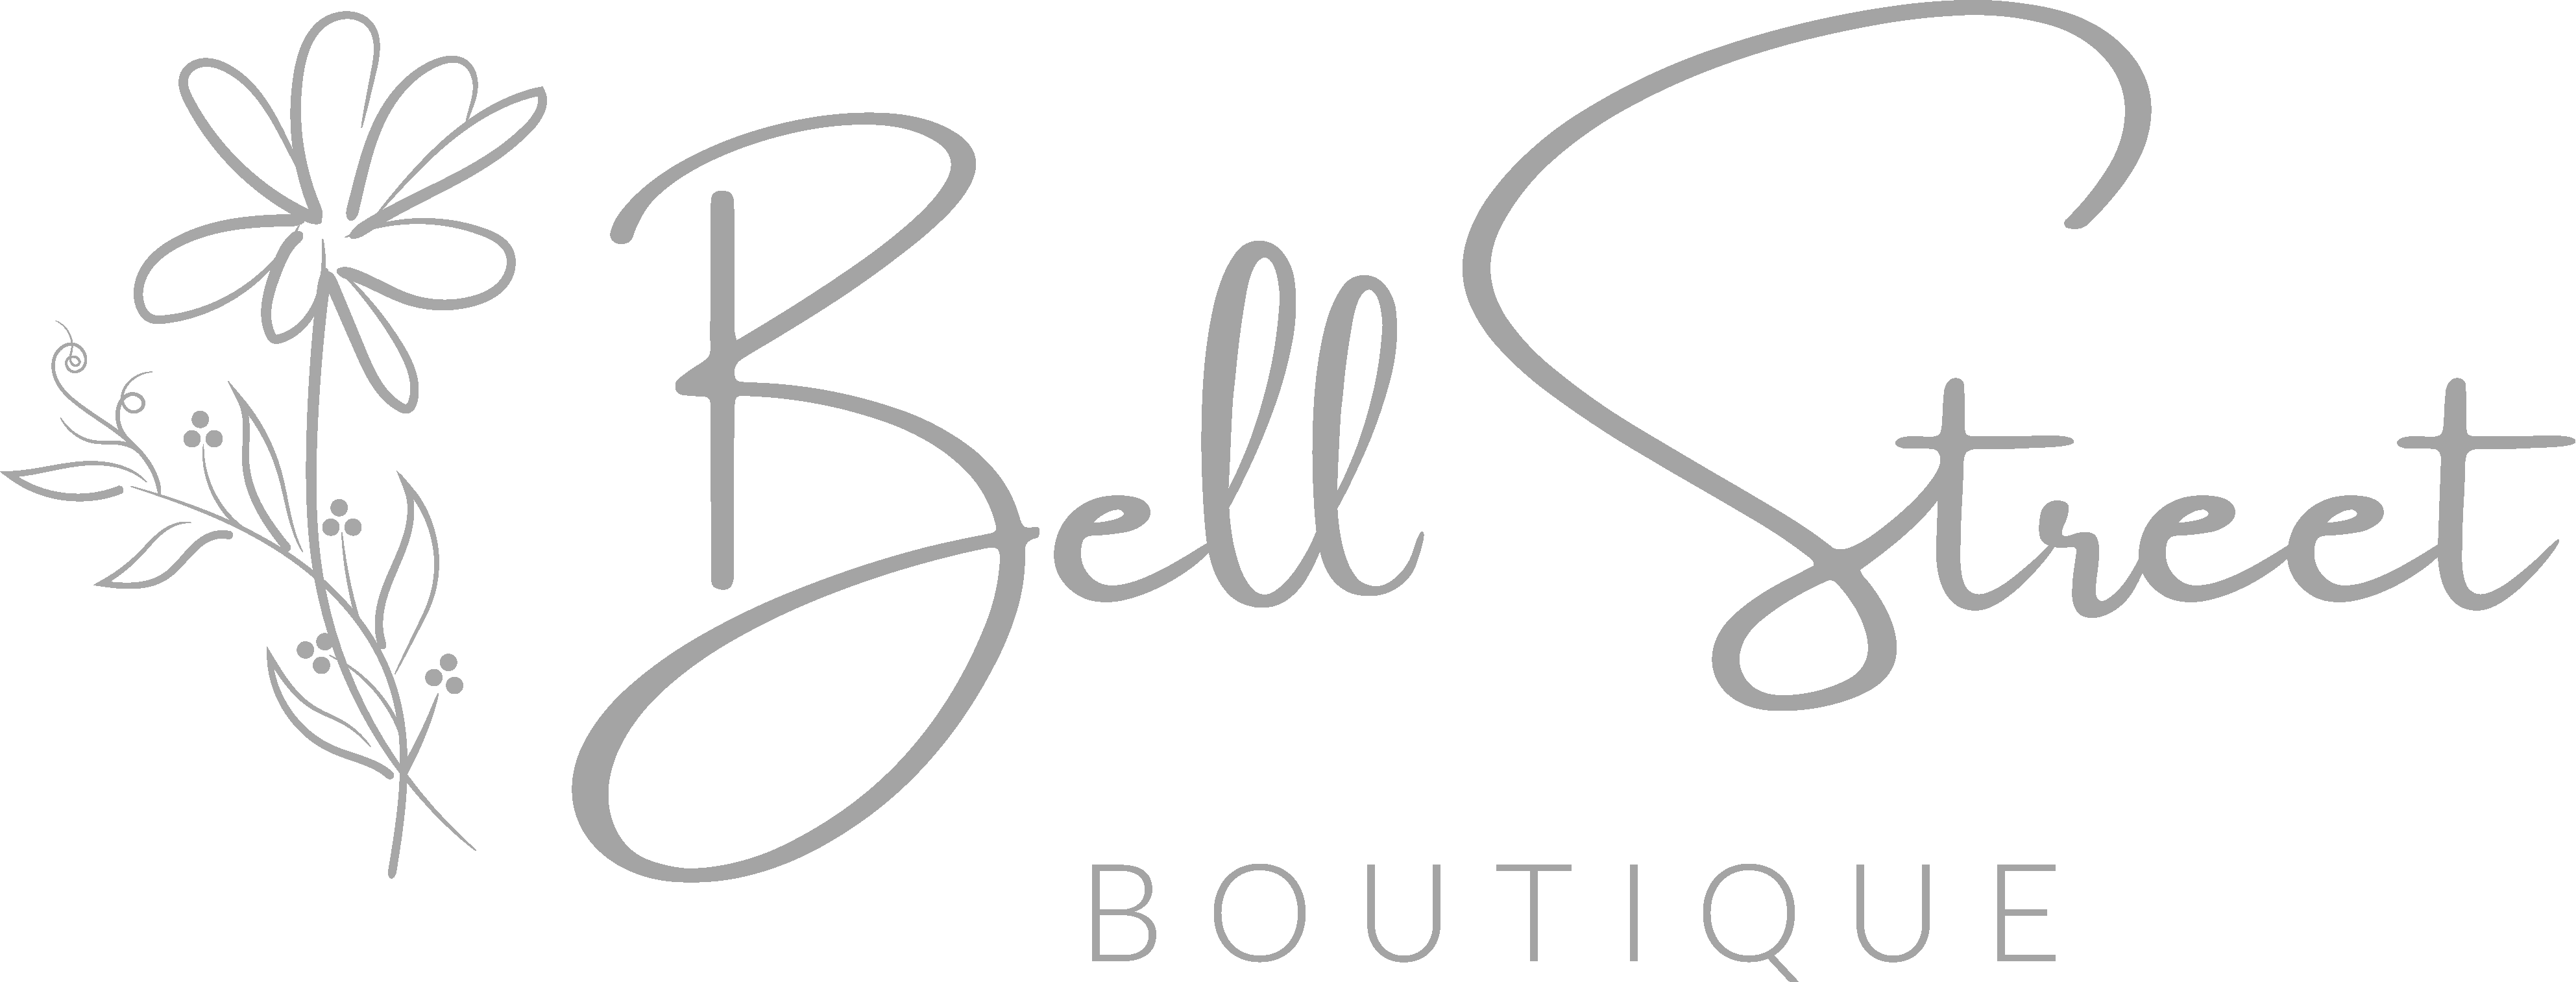 Bell Bootique